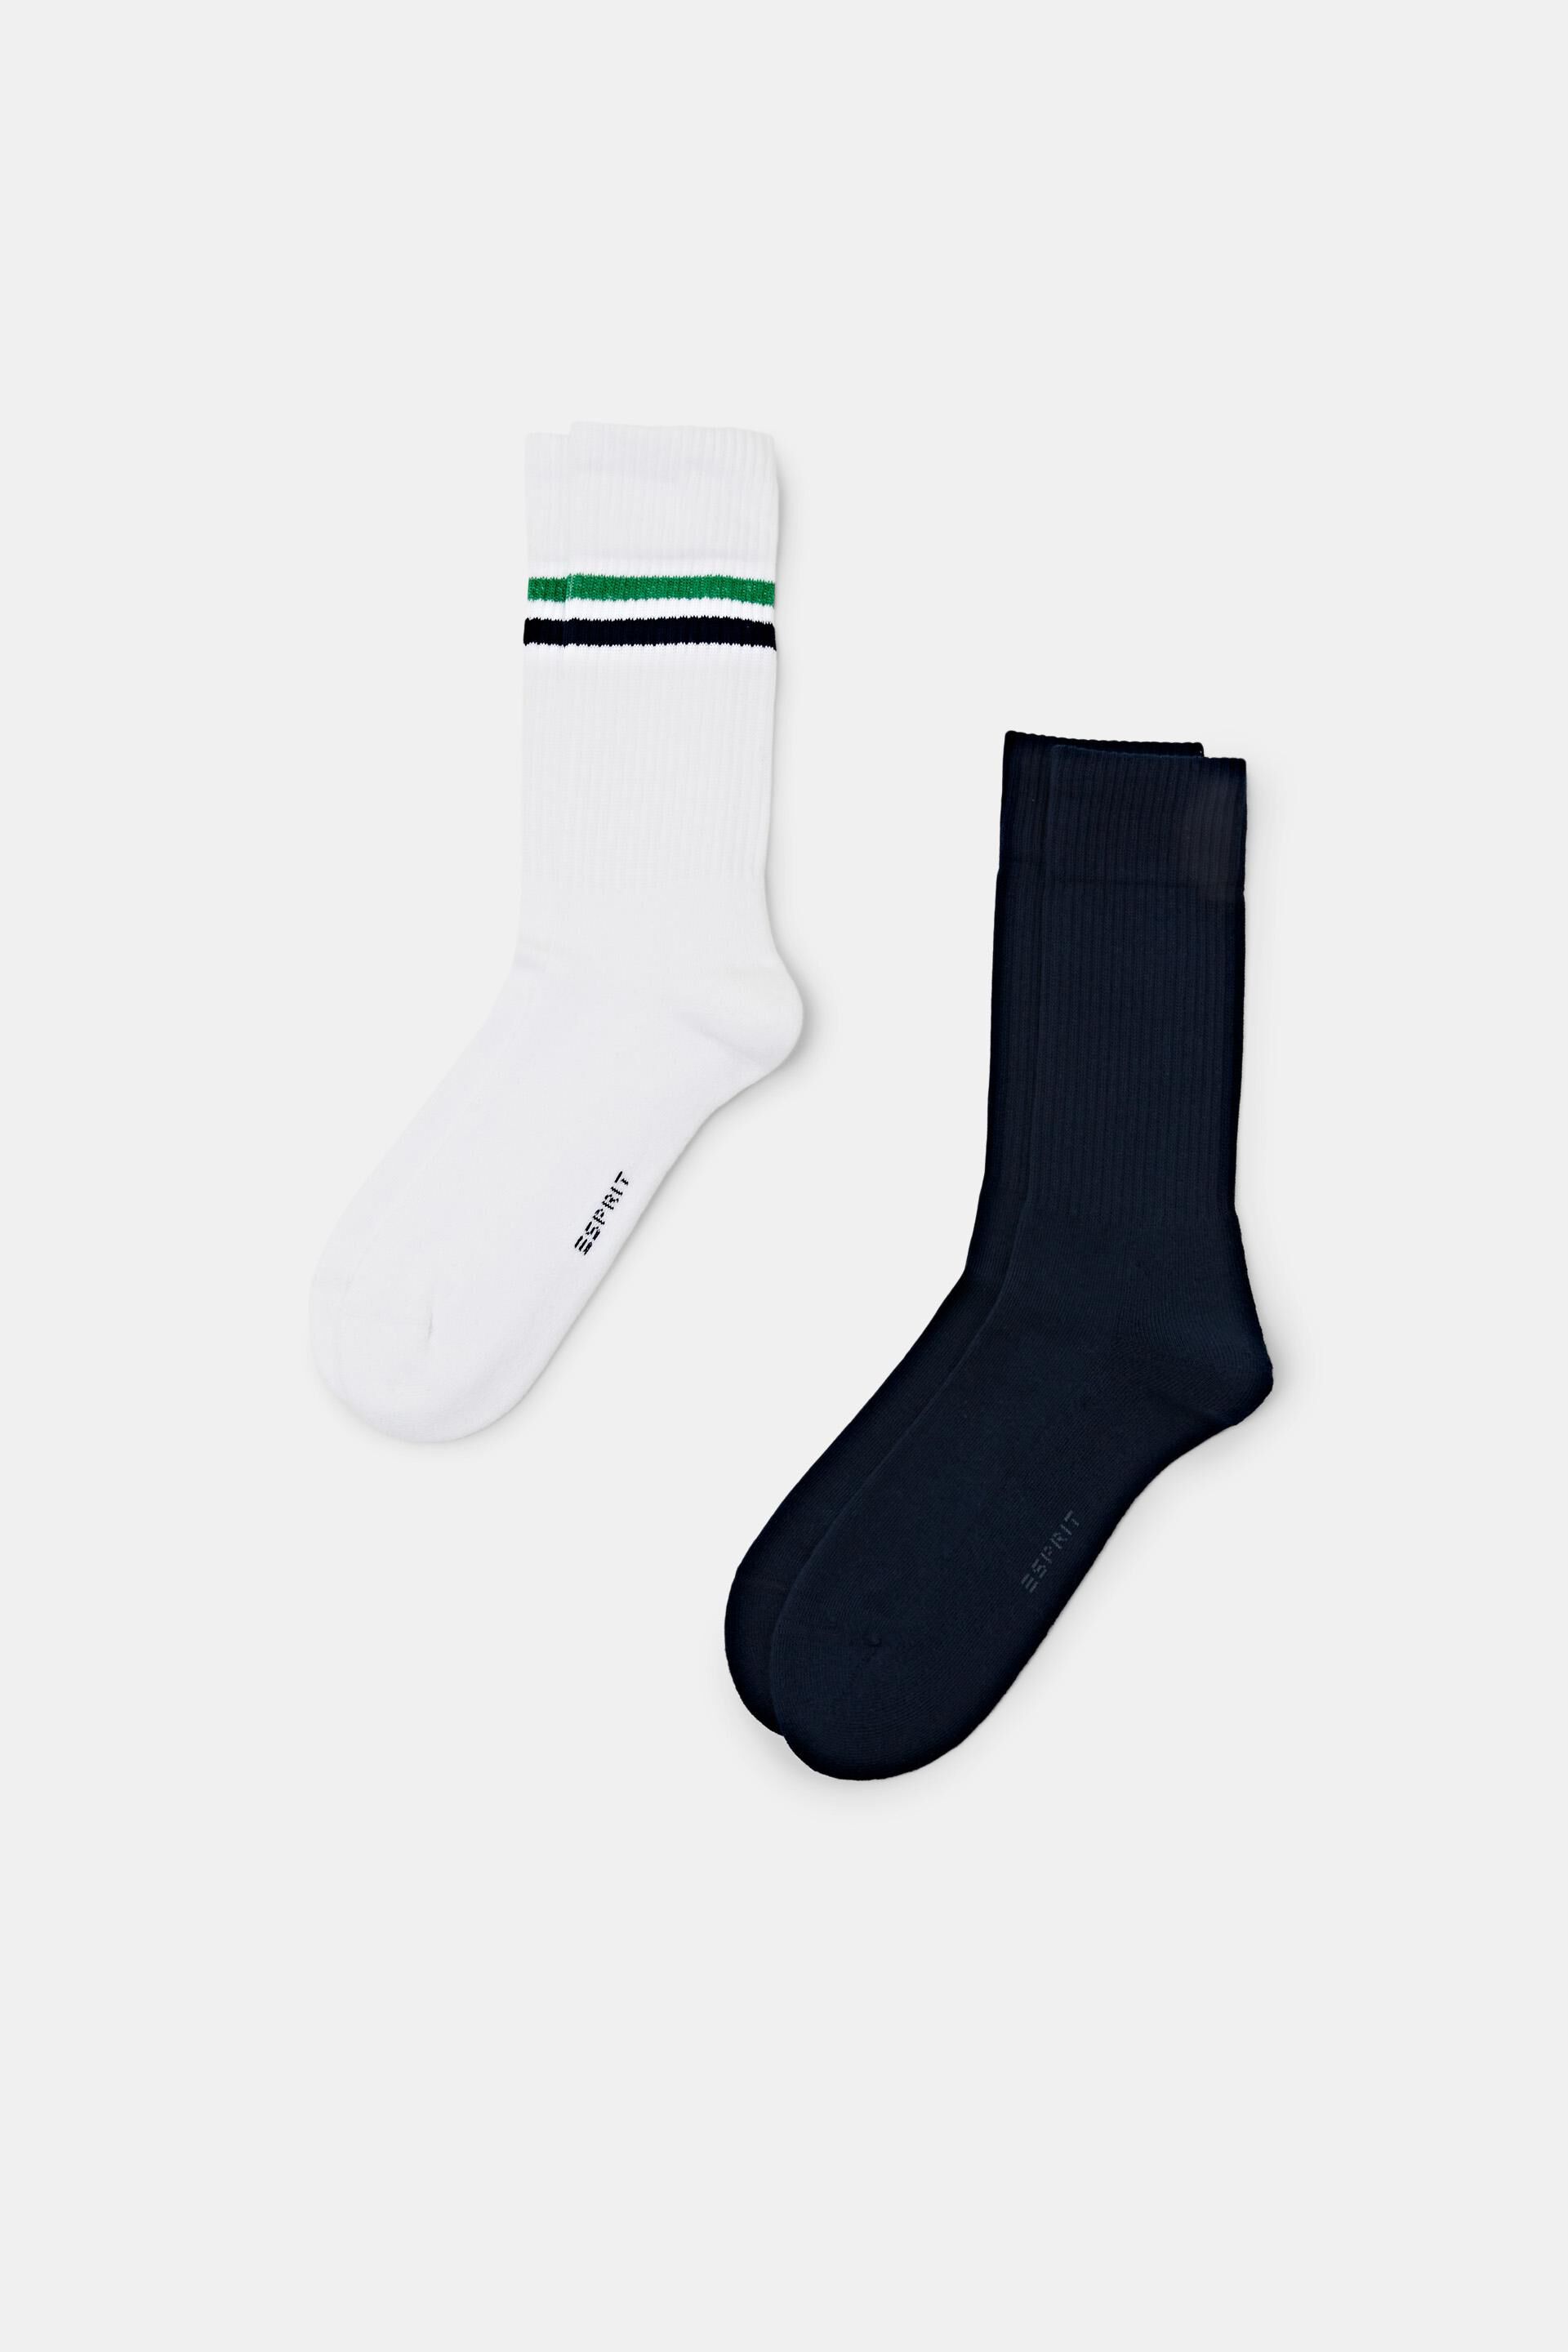 Esprit athletic organic 2-pack cotton of socks,